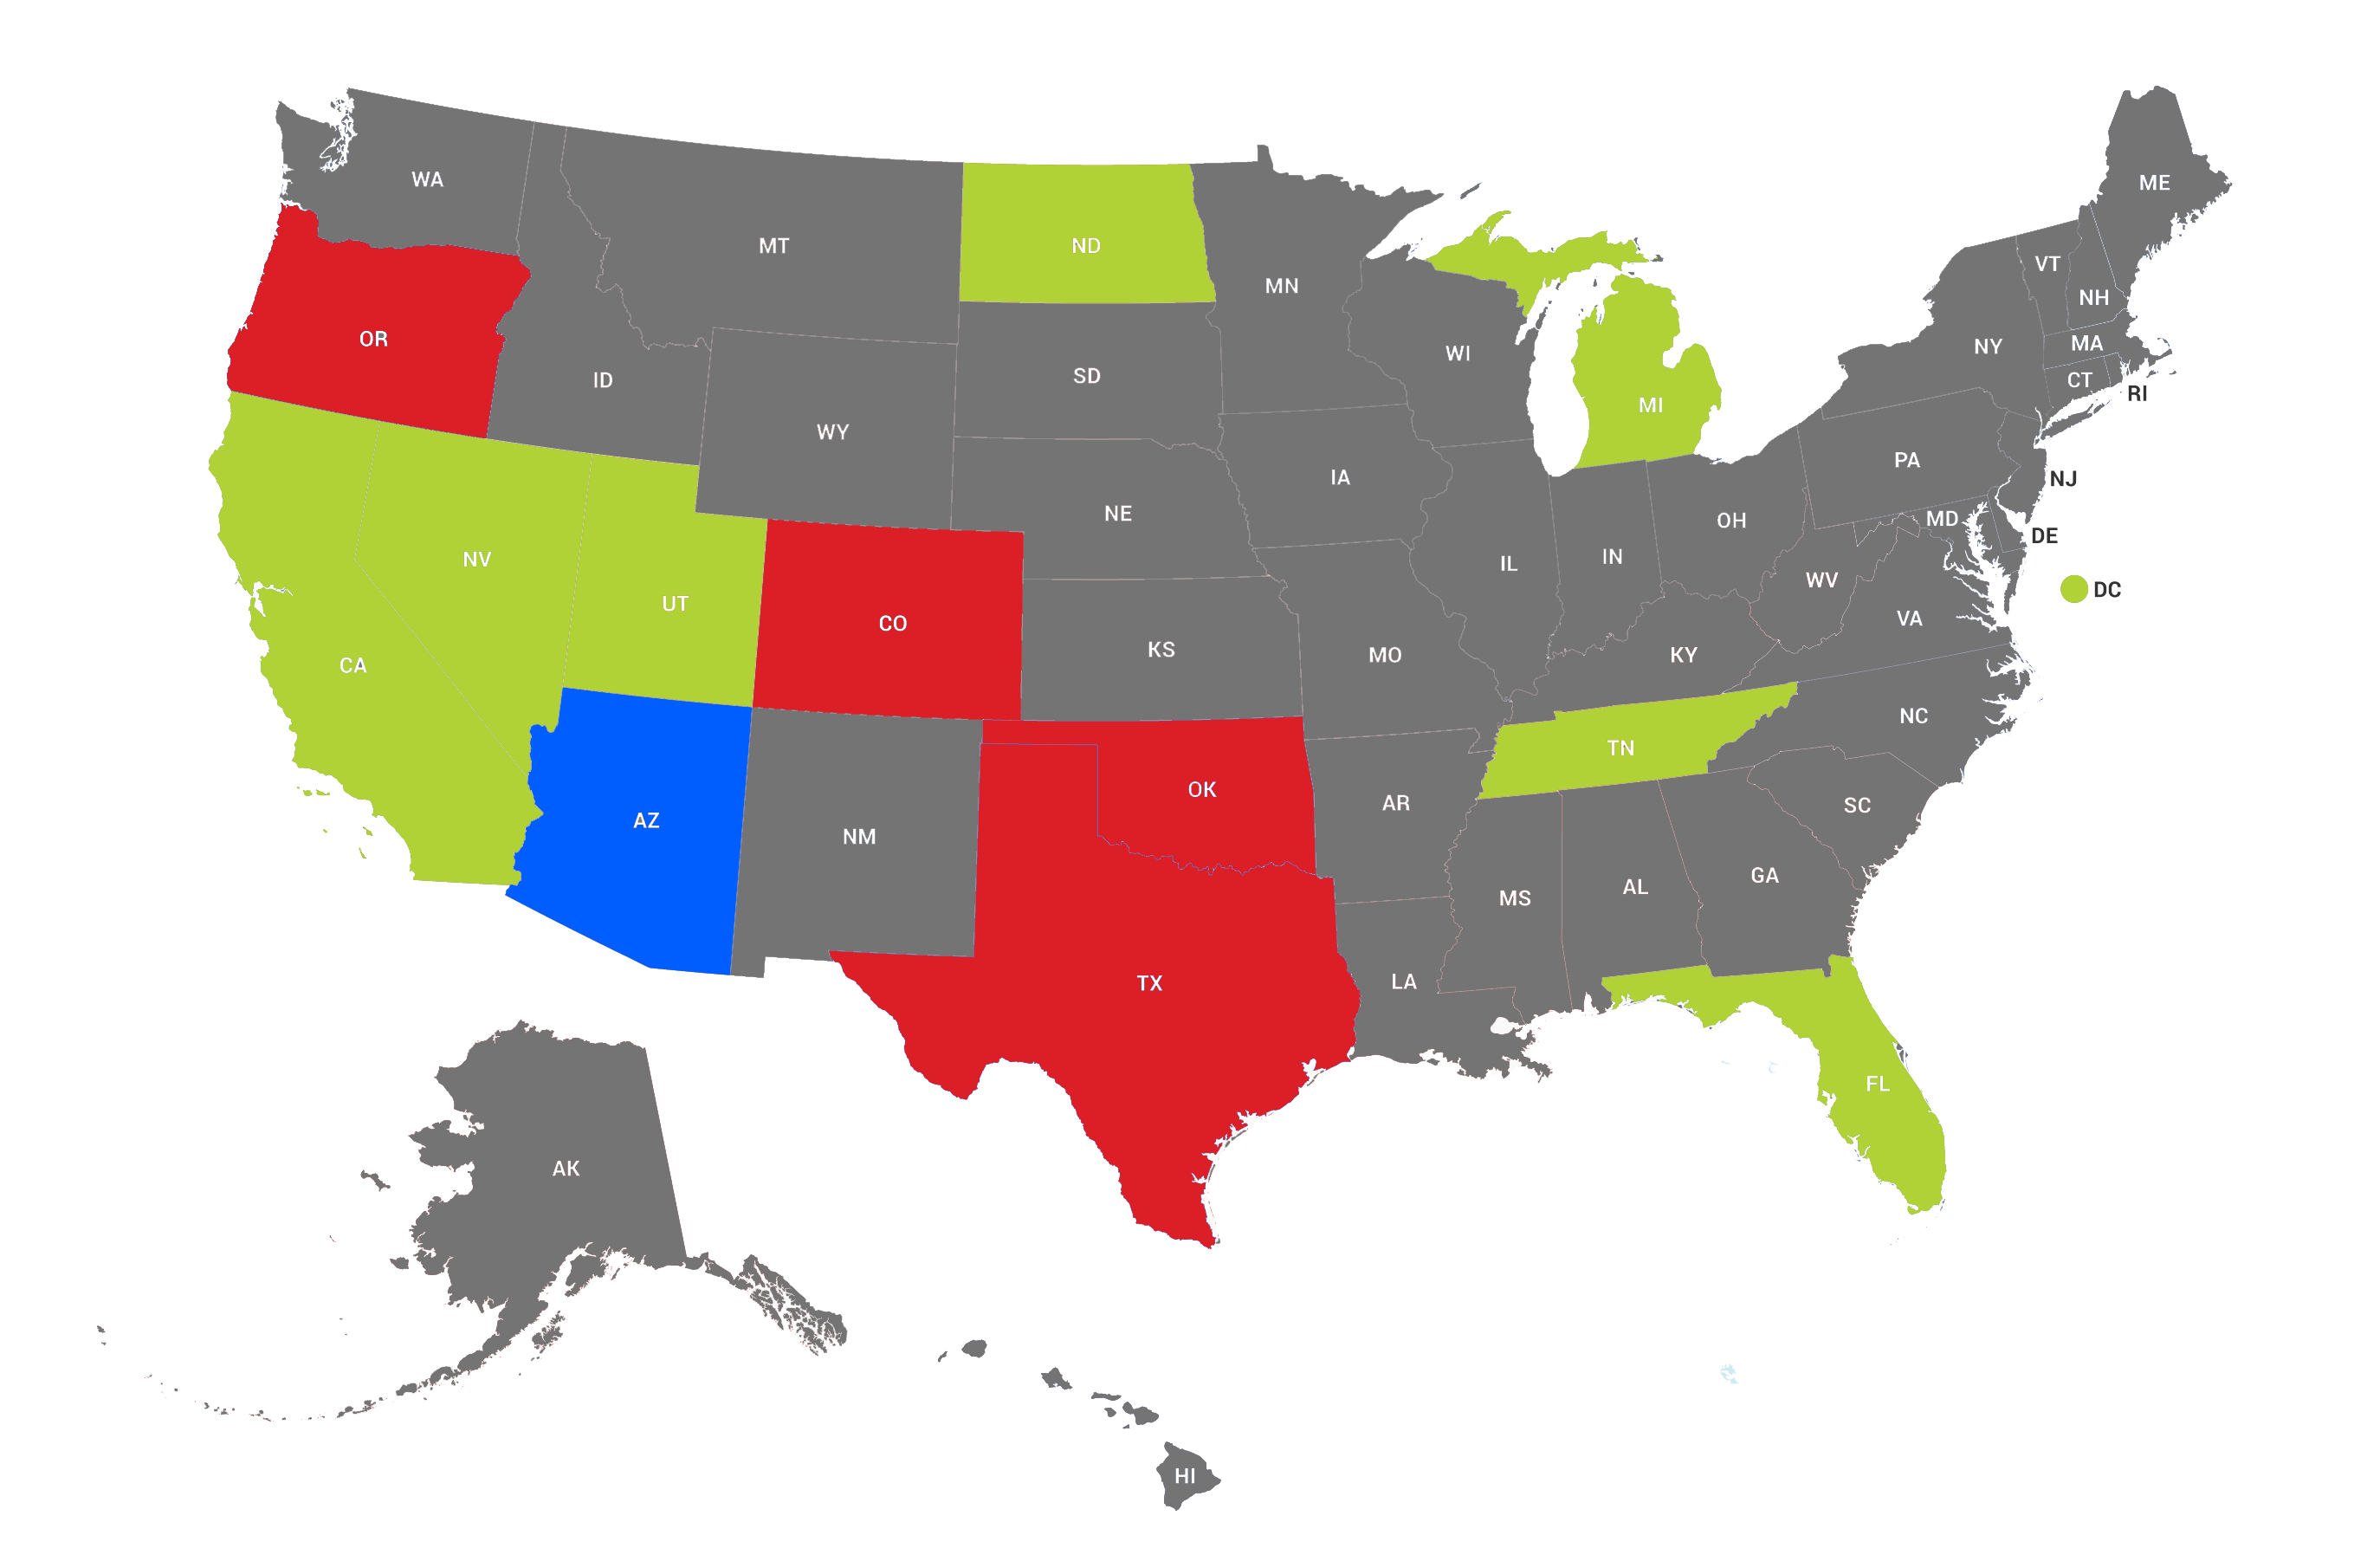 Legislation across the US